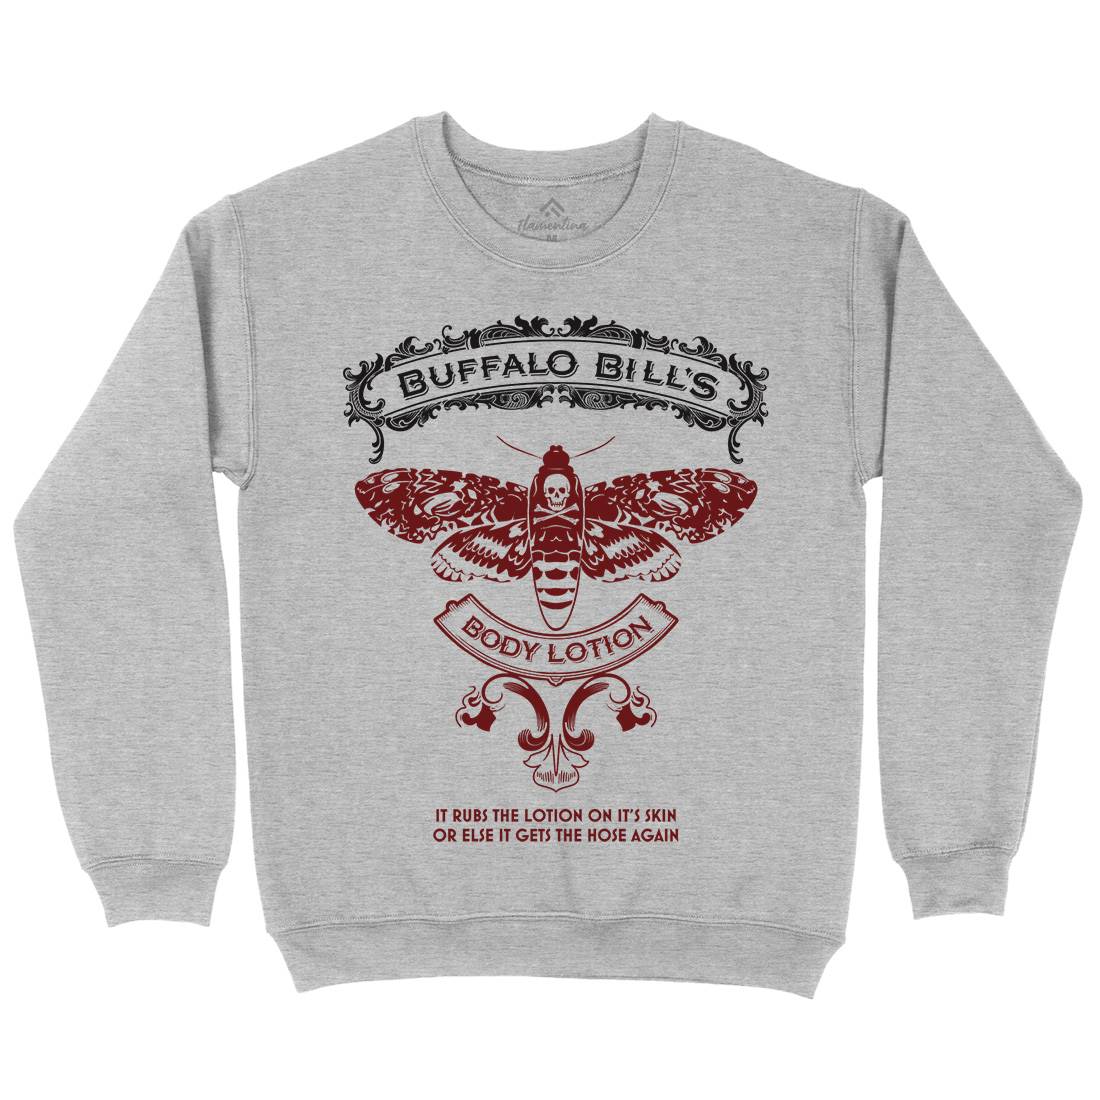 Buffalo Bills Body Lotion Kids Crew Neck Sweatshirt Horror D269